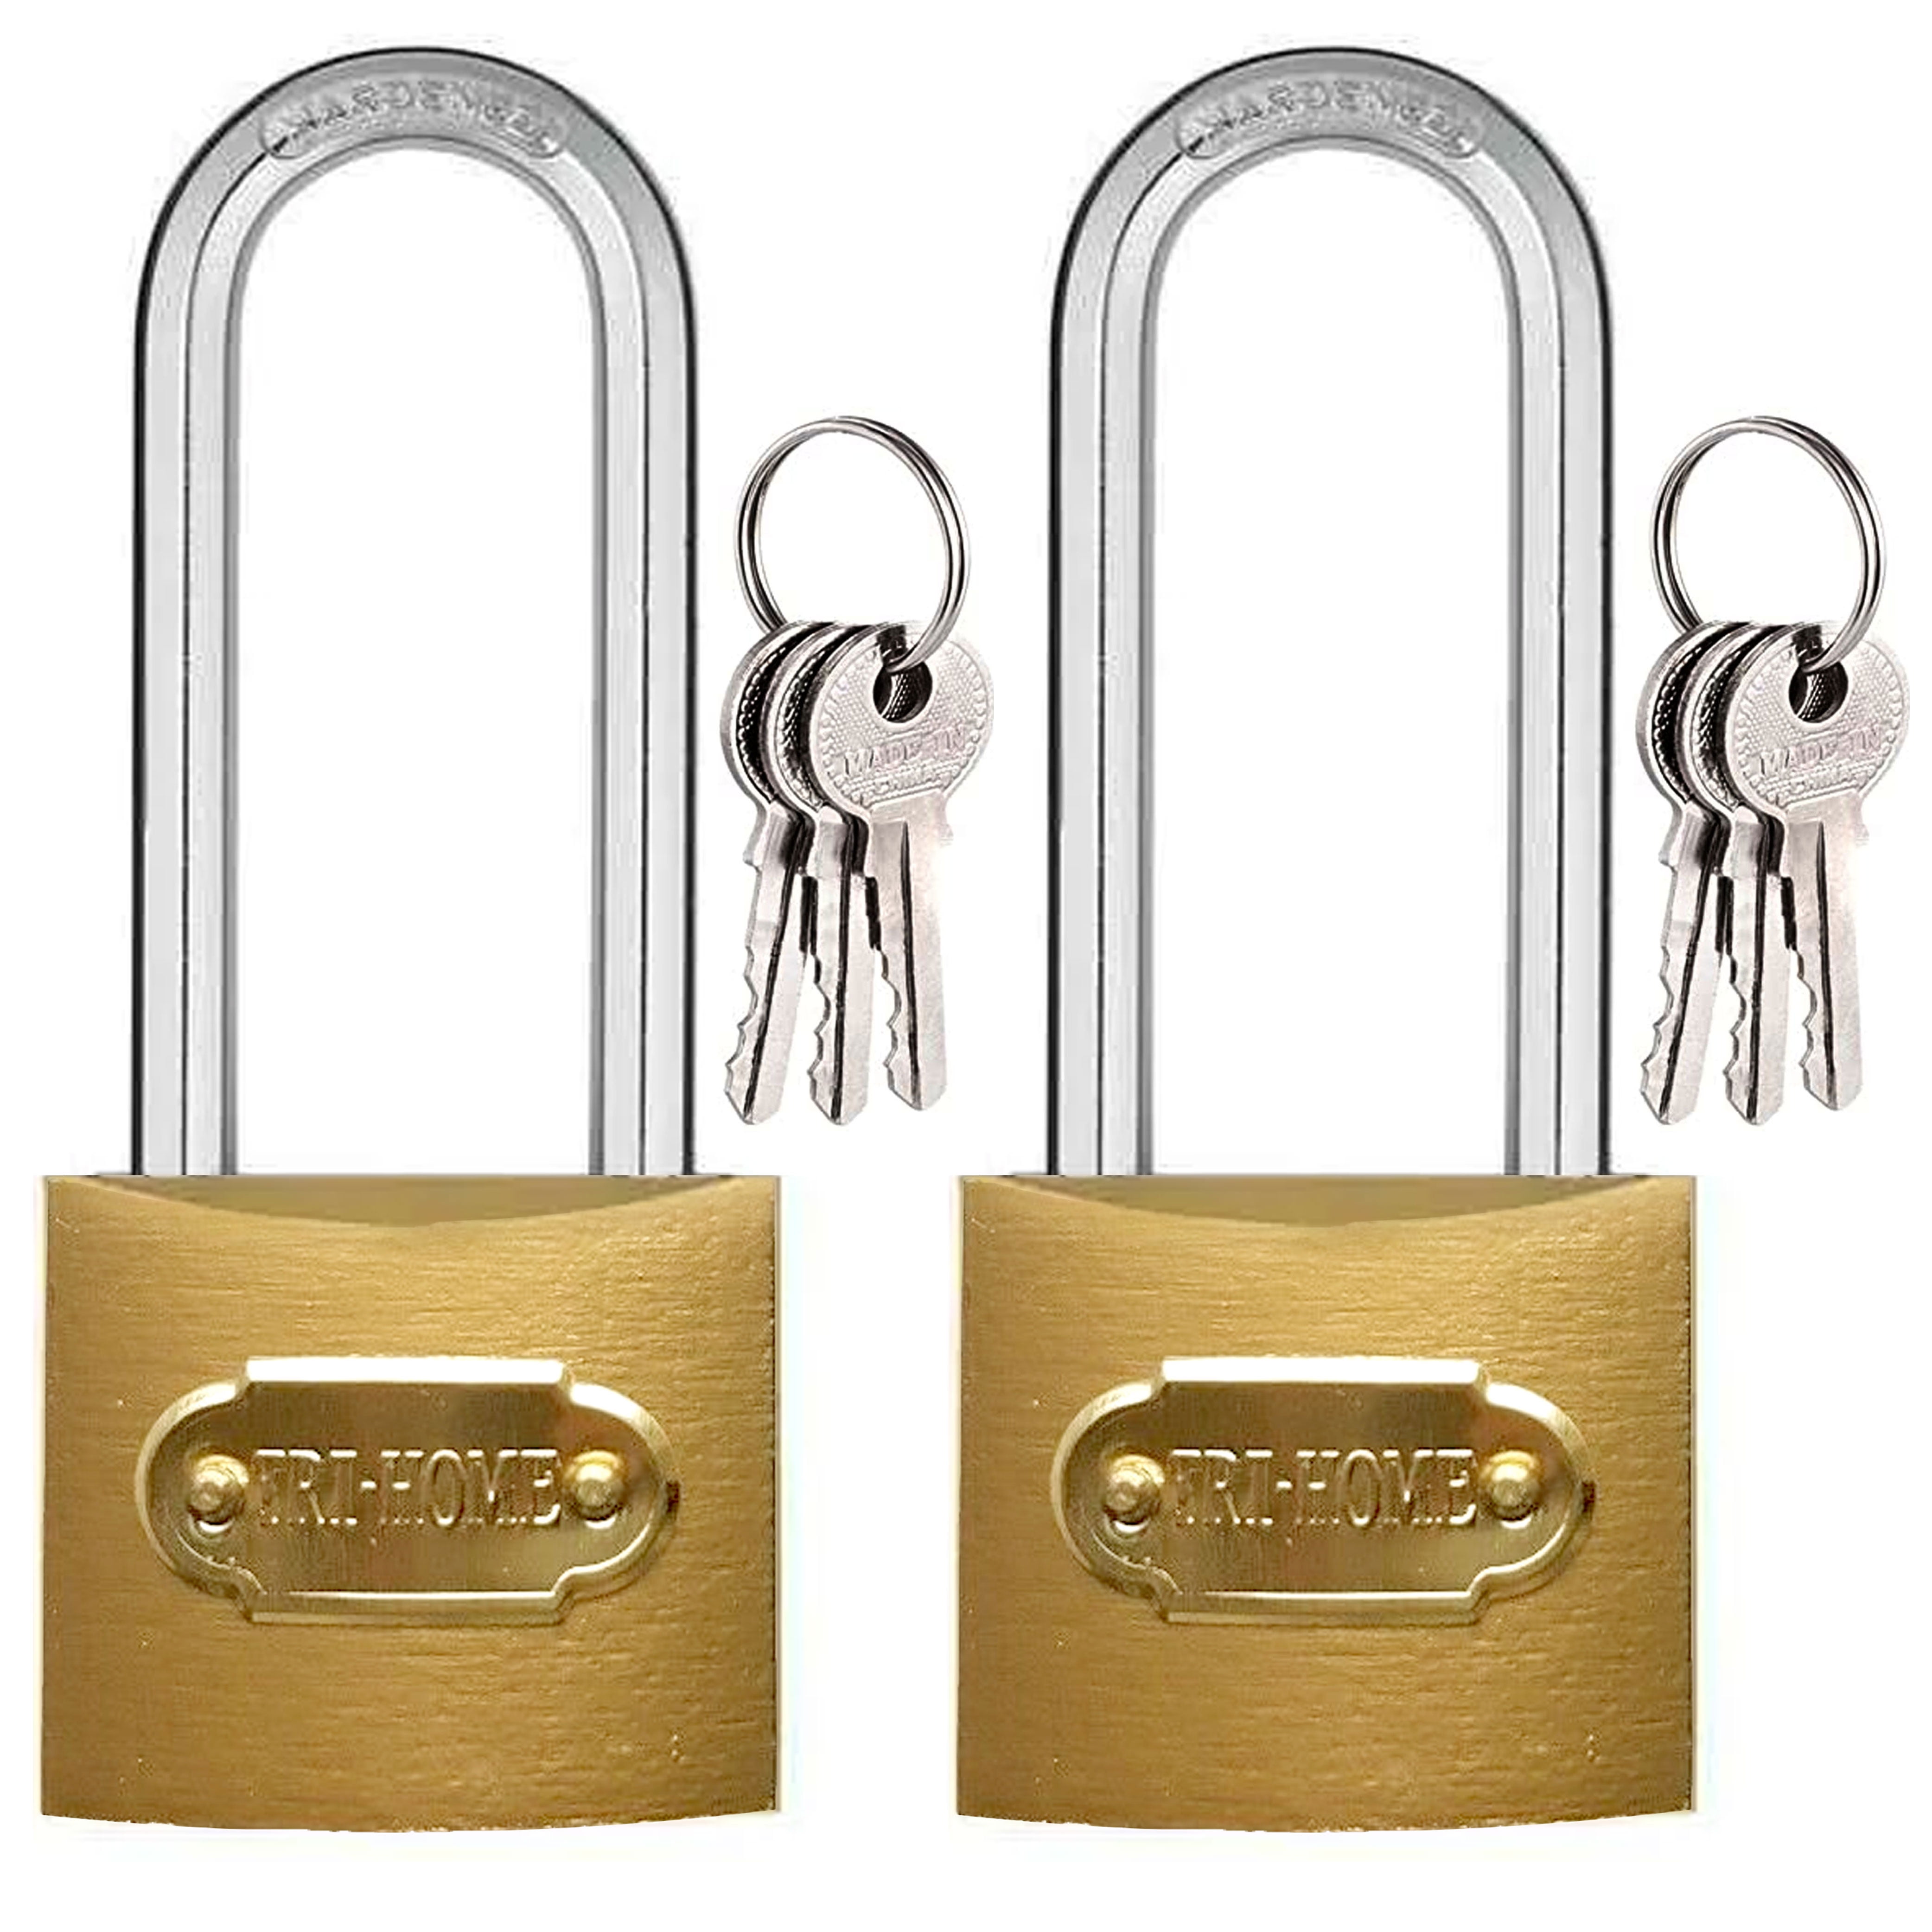 LONG SHACKLE PADLOCK 3 Keys Gate/Shed/Door/Locker Large Security Safety Lock 